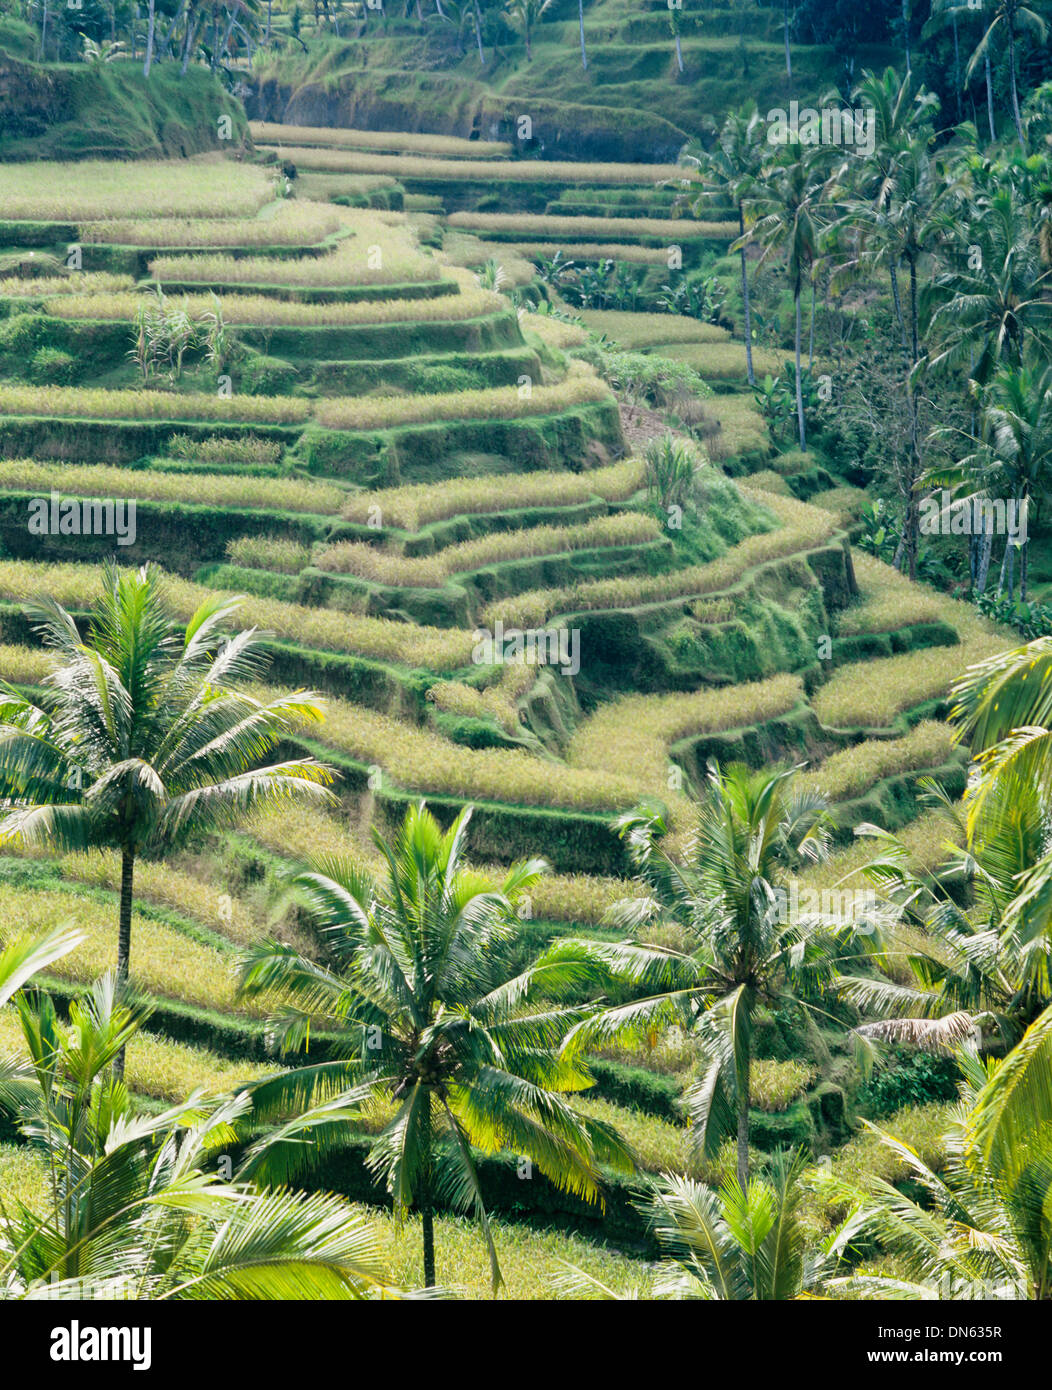 View of rice terrace fields, Ubud, Bali, Indonesia Stock Photo